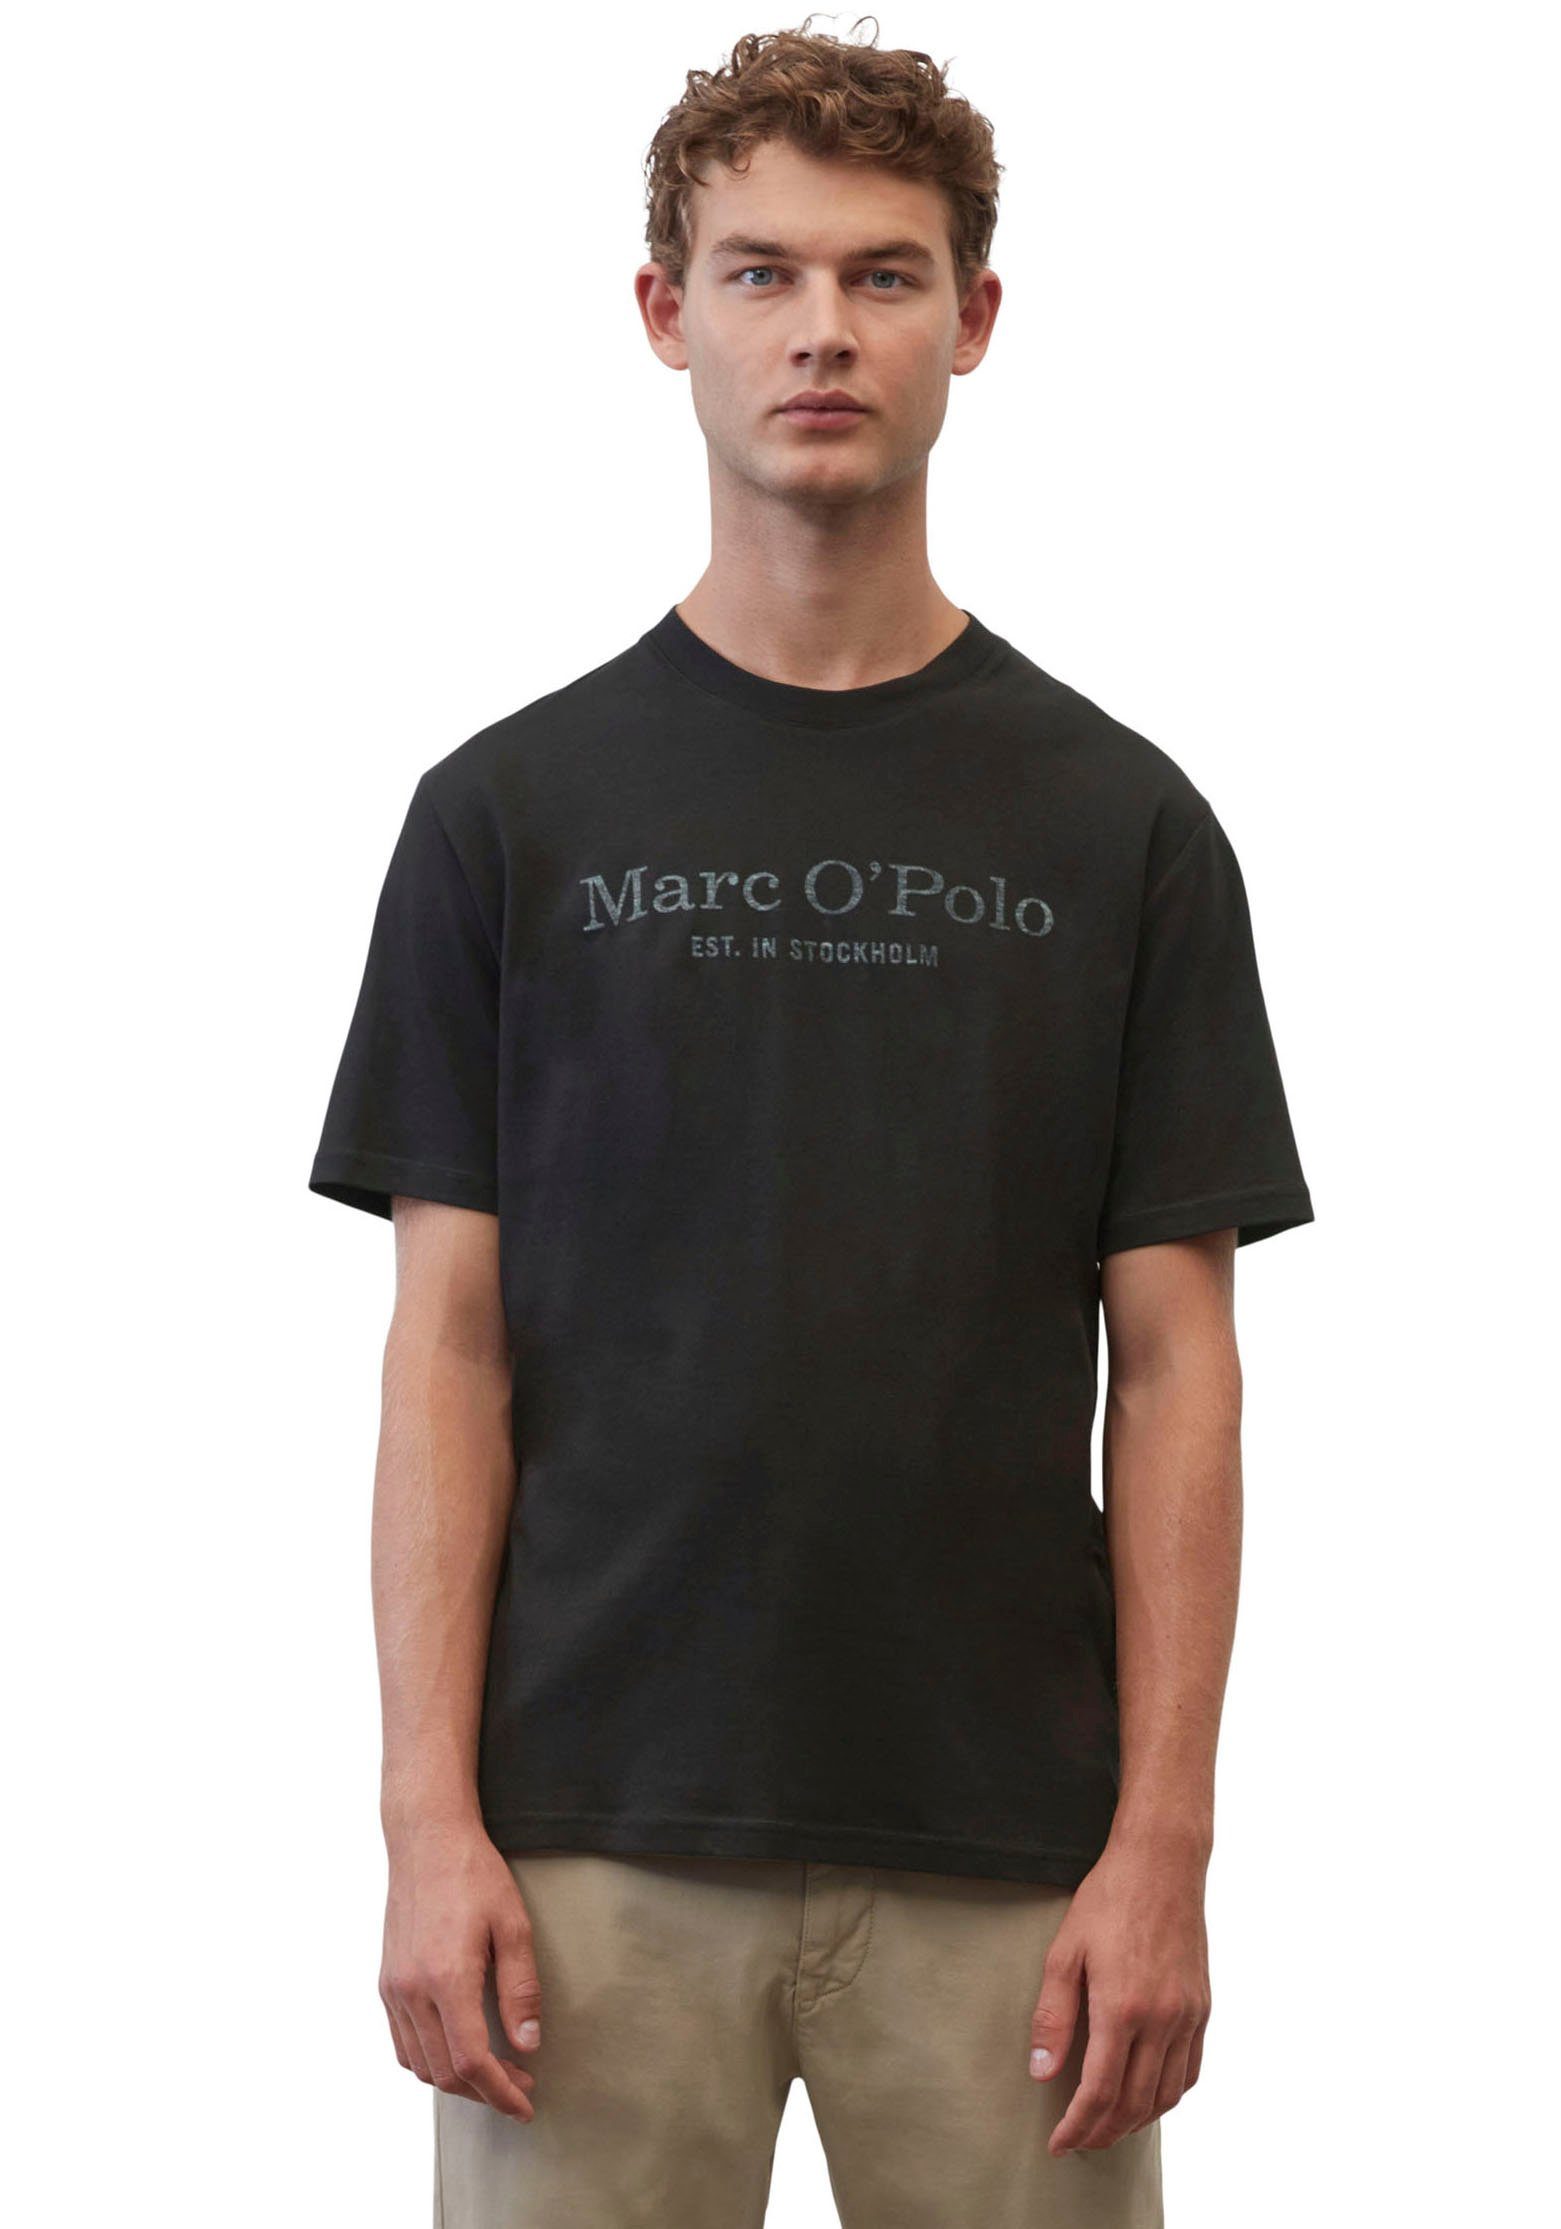 O'Polo Logo-T-Shirt klassisches Marc schwarz T-Shirt